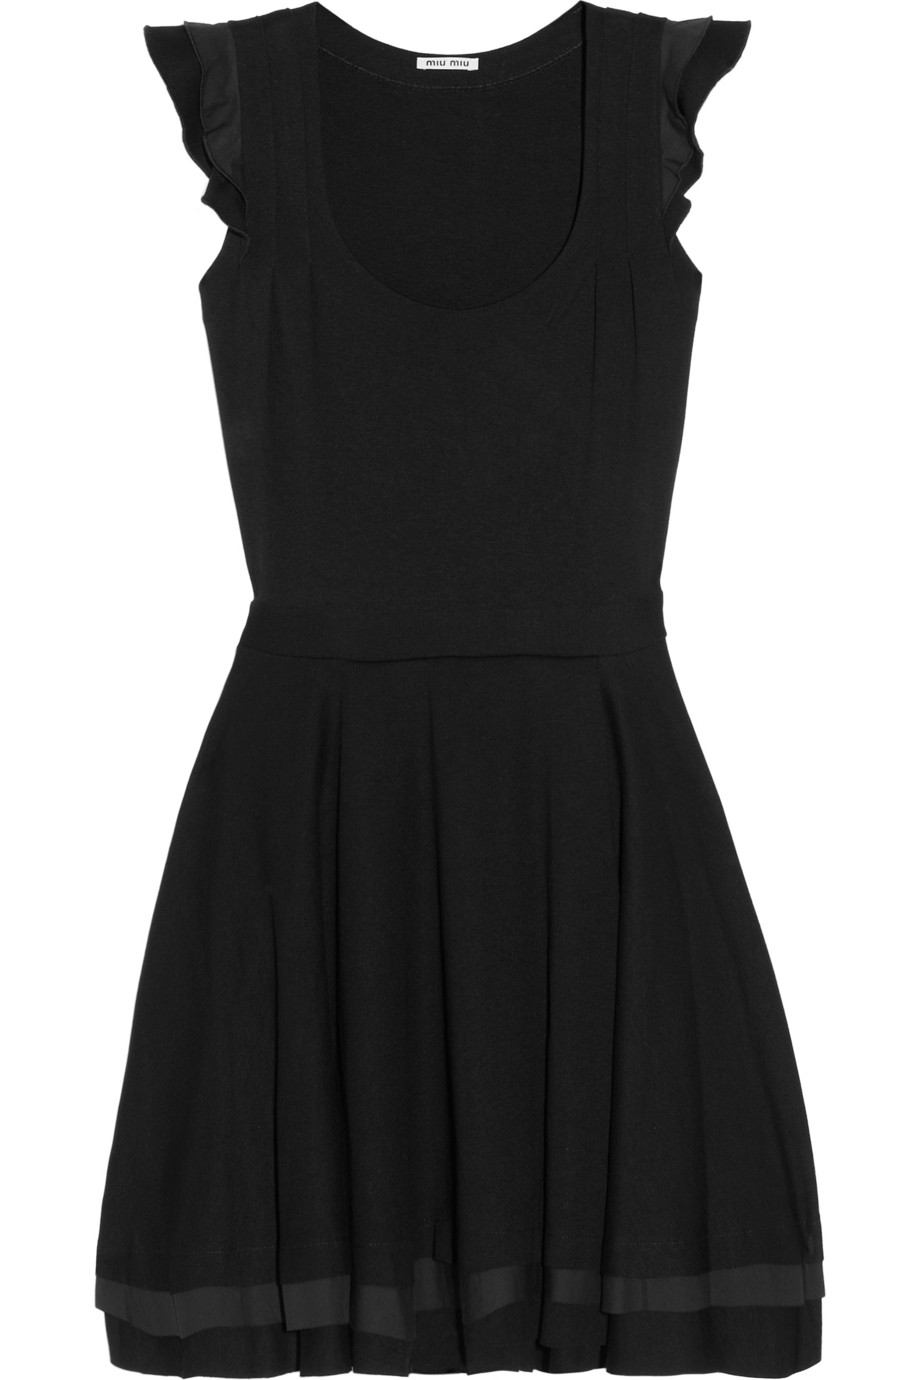 Lyst - Miu Miu Ruffled Stretch-jersey Mini Dress in Black